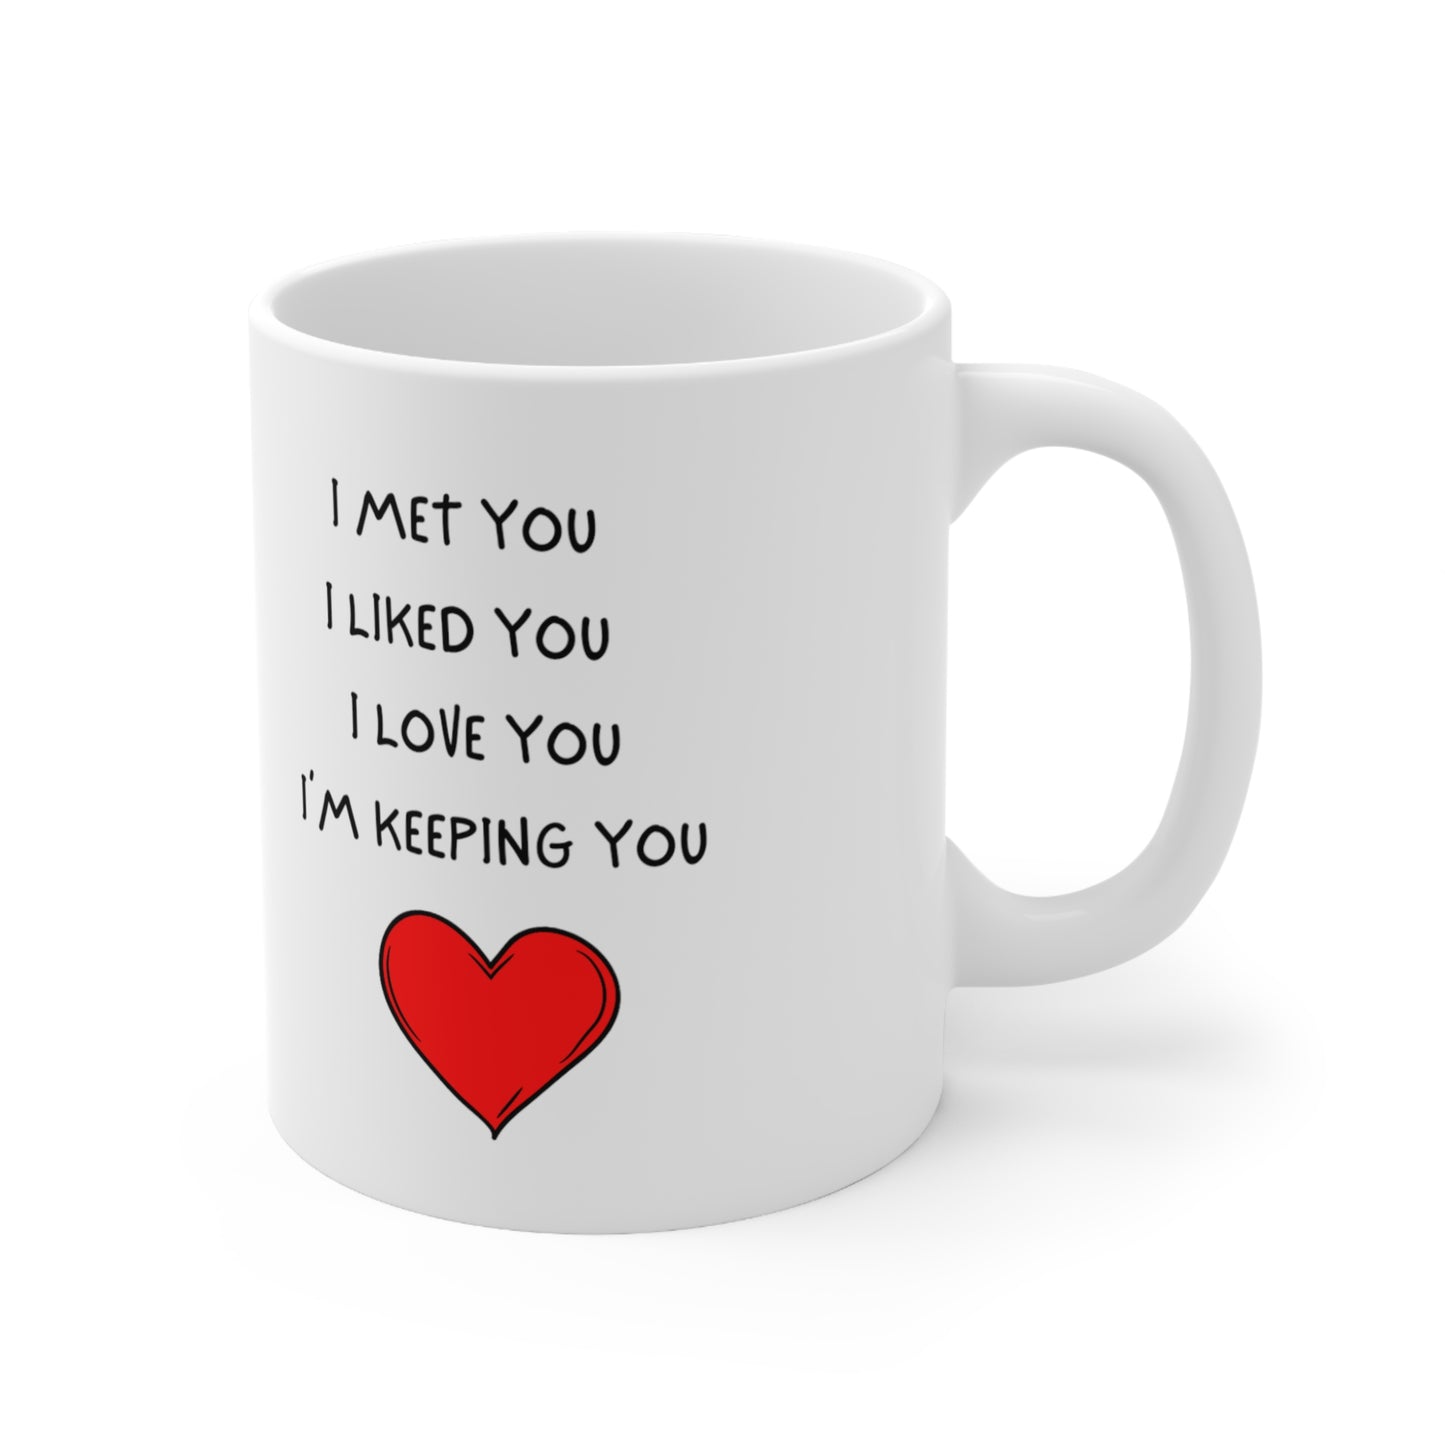 I MET YOU I LIKED YOU I LOVE YOU I'M KEEPING YOU Ceramic Mug 11oz